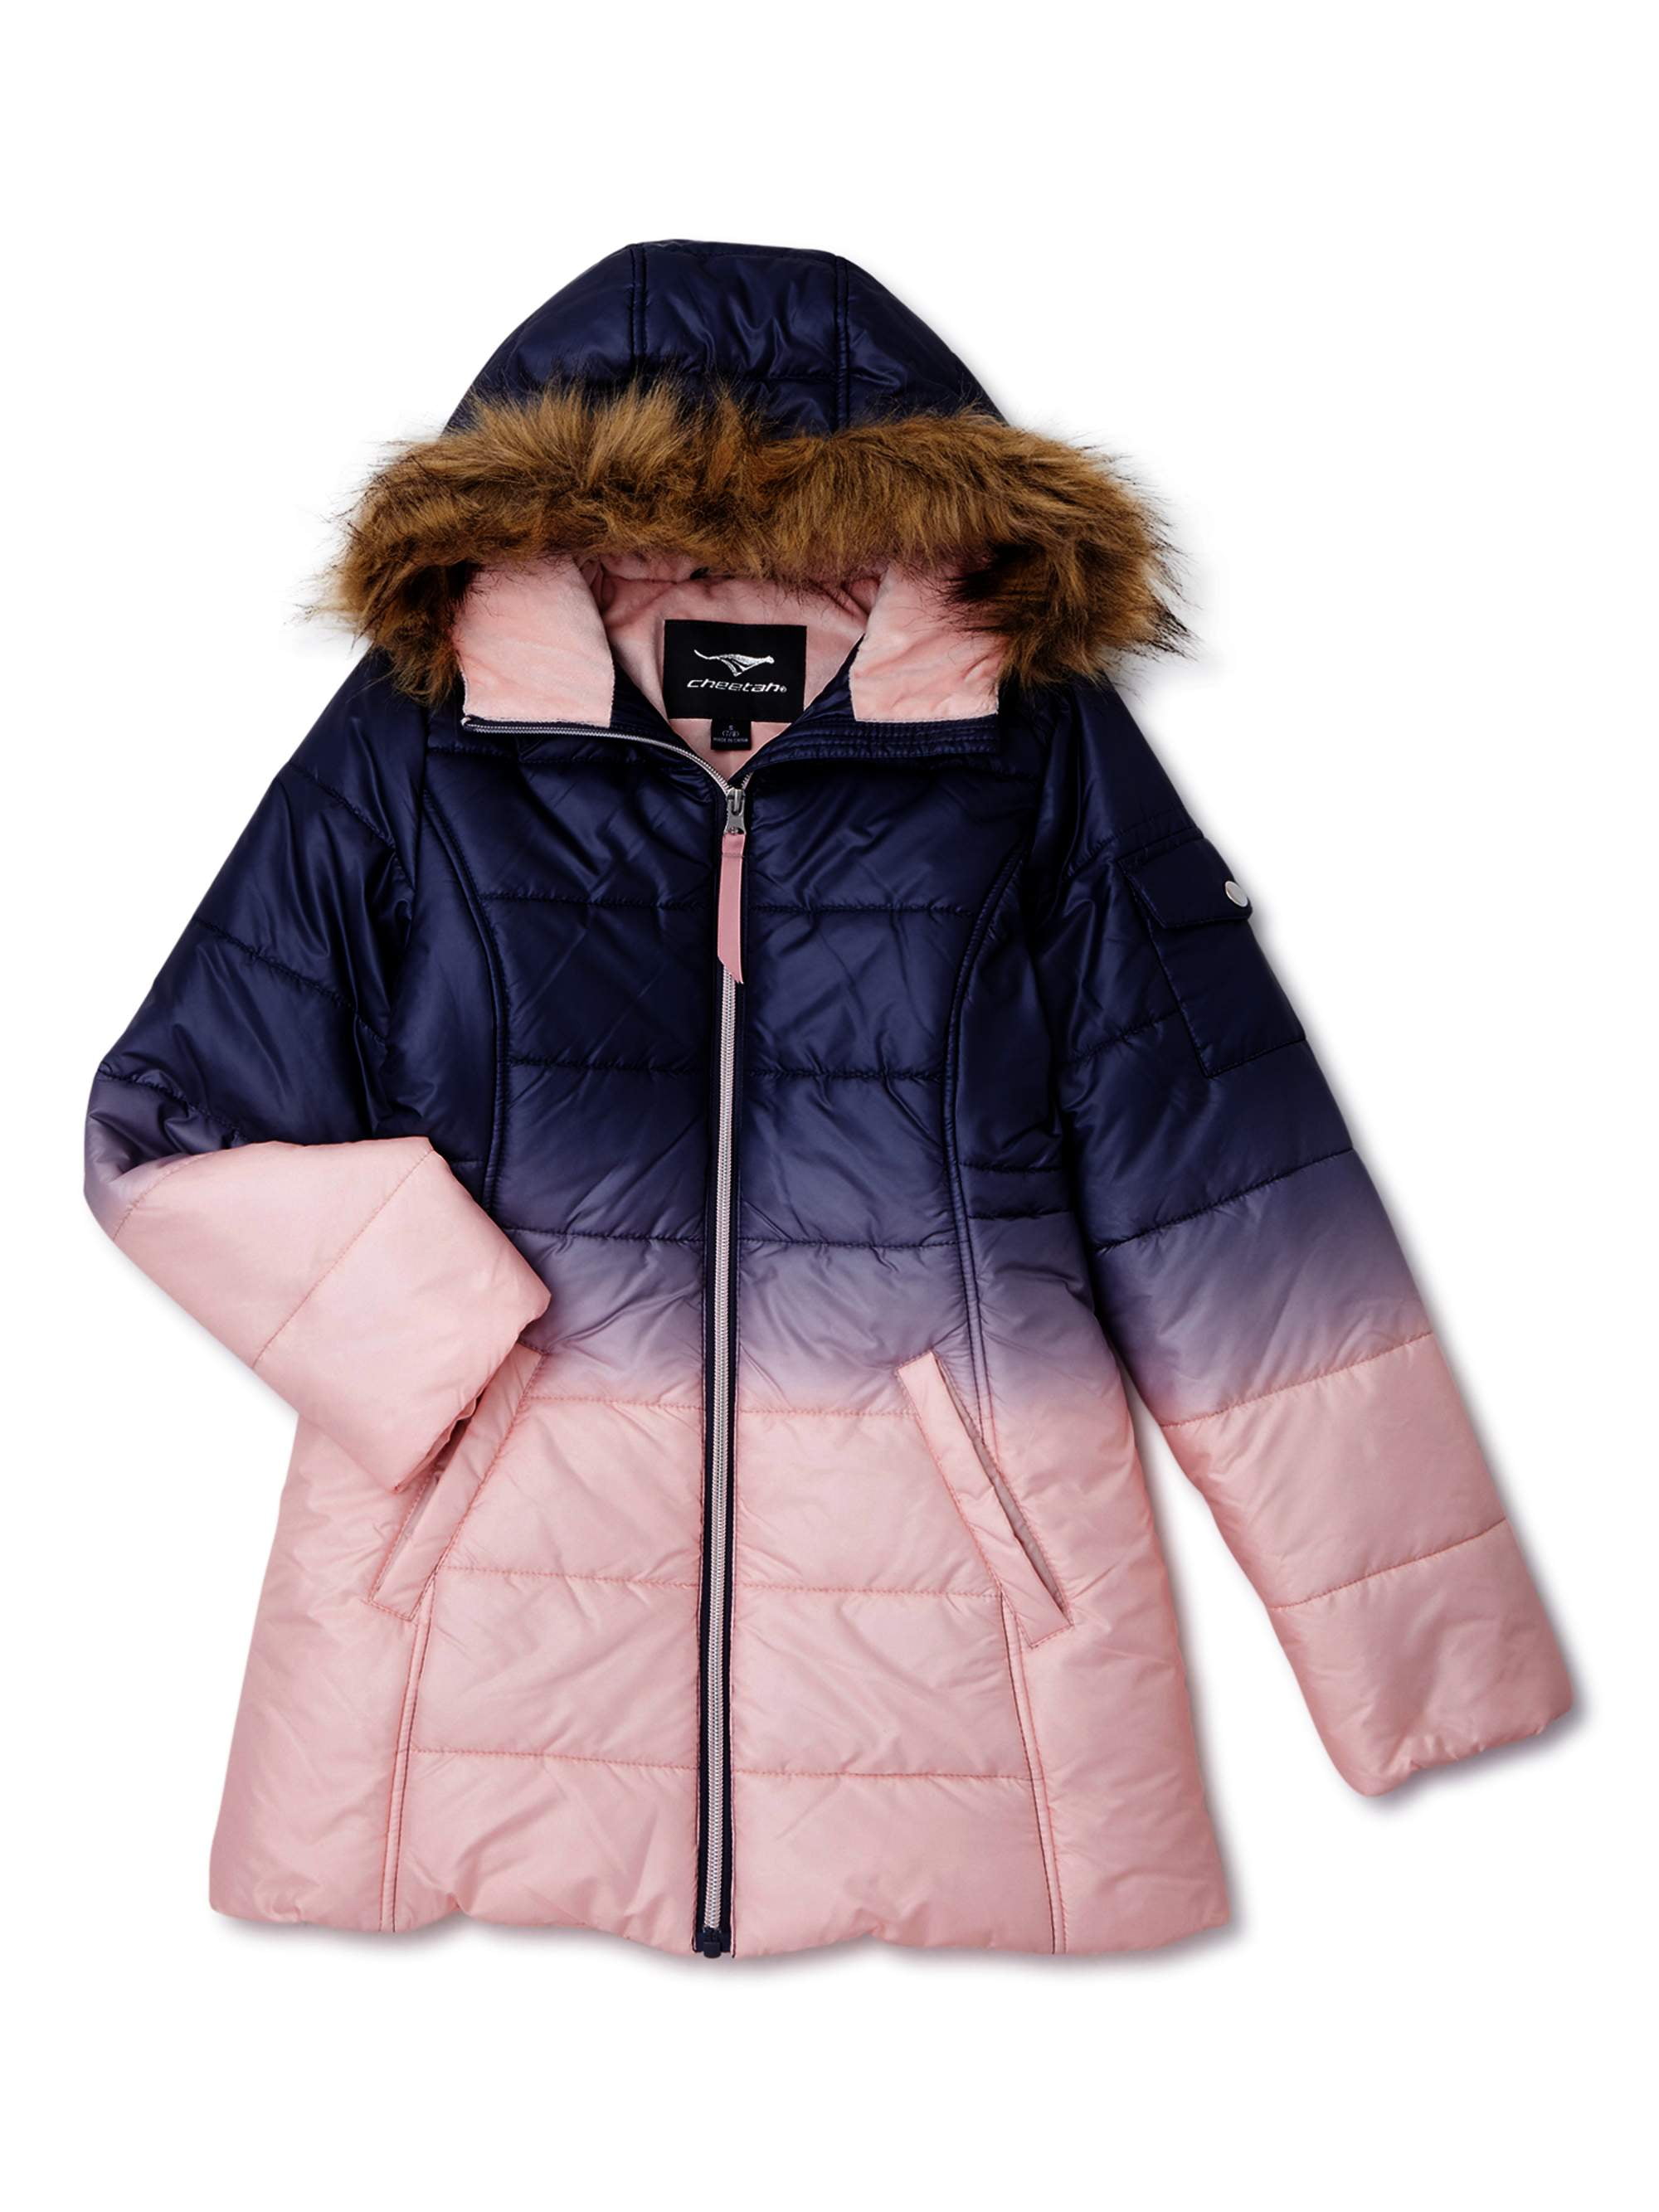 Black Kids Unisex Padded Bubble Parka Winter Jacket With Faux Fur Trim Hood 